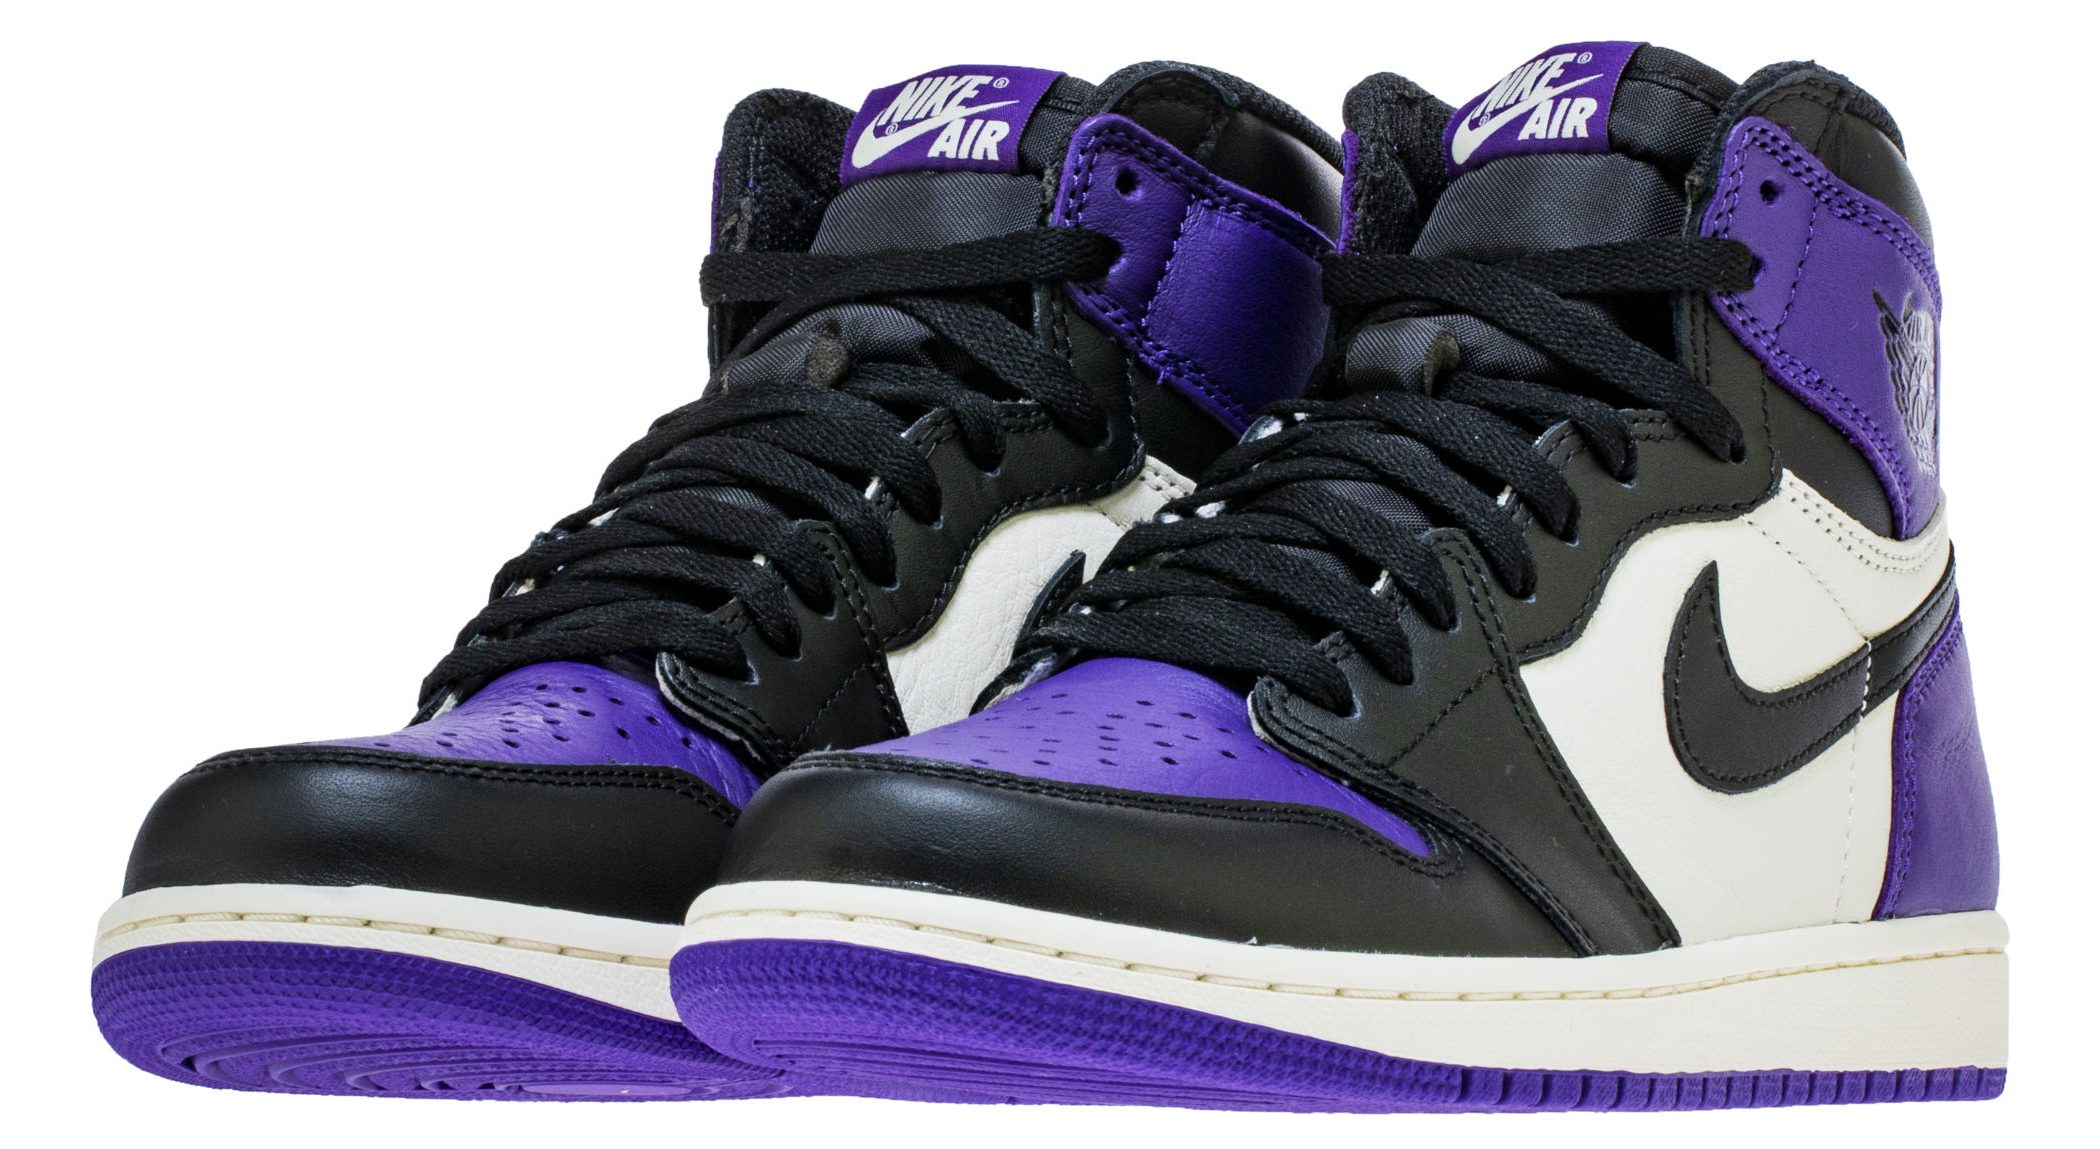 Nike Air Jordan 1 Court Purple. Aj1 Court Purple. Purple air купить